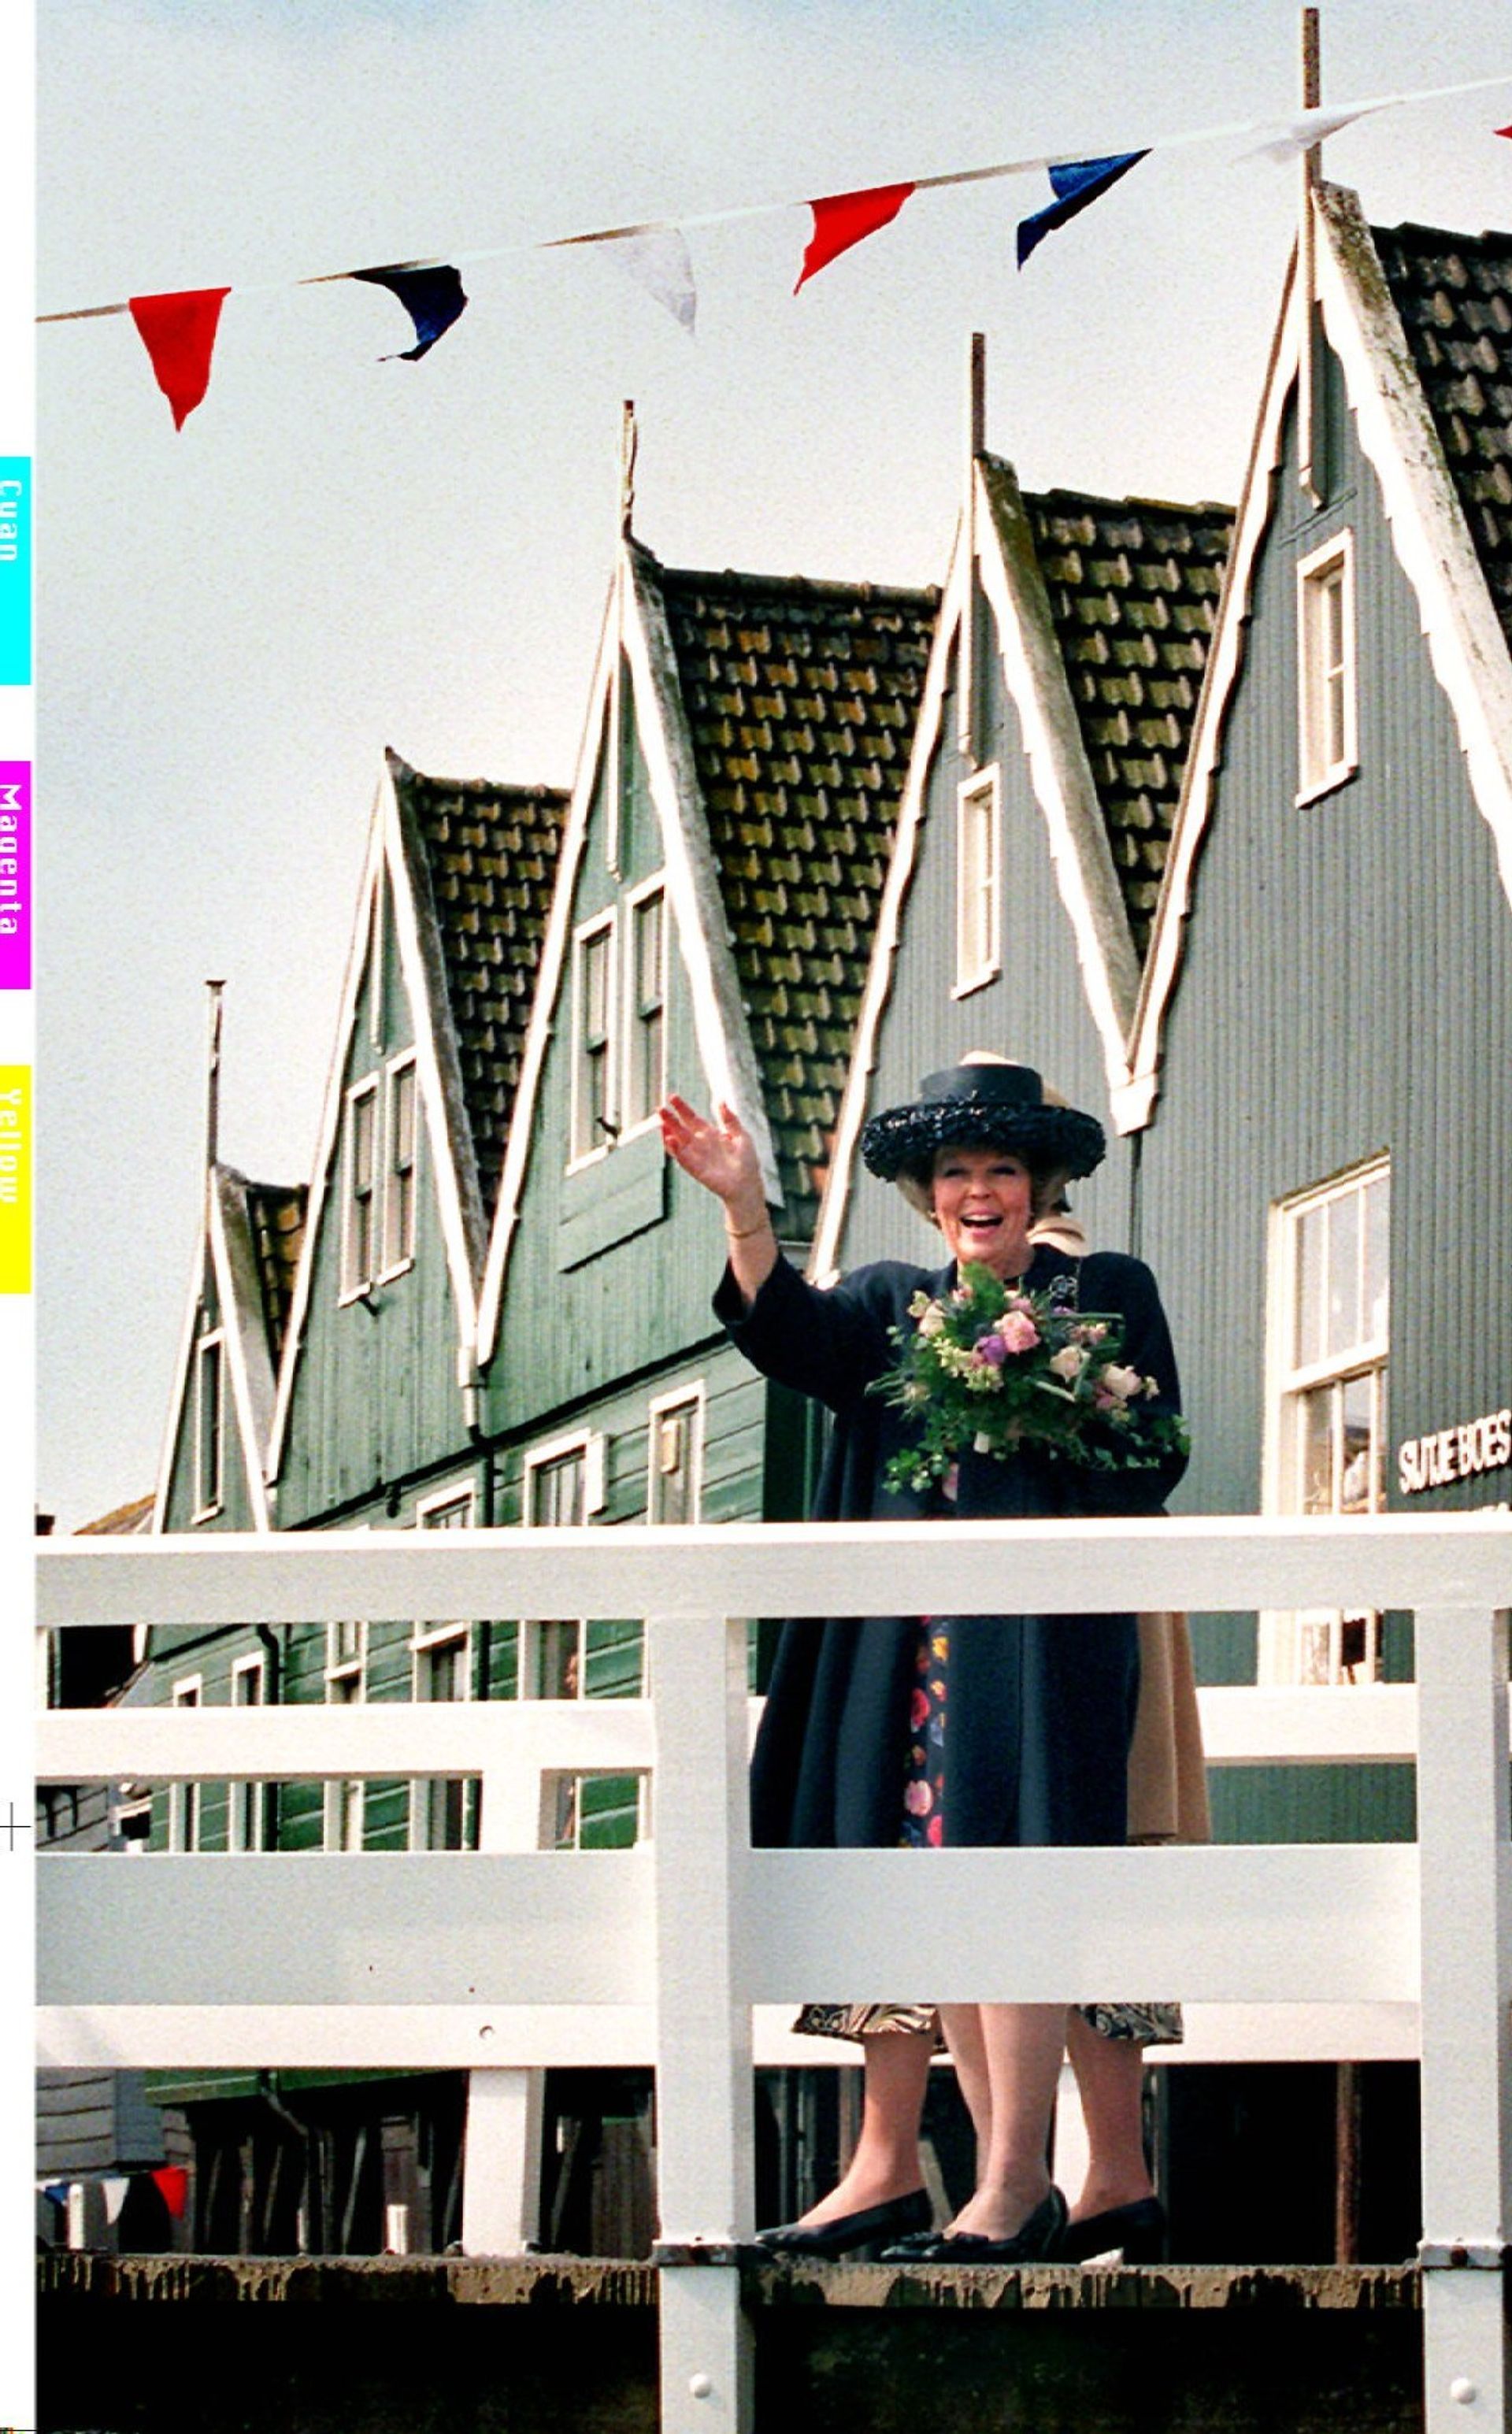 Koninginnedag 1997 op Marken en in Velsen, provincie Noord-Holland.